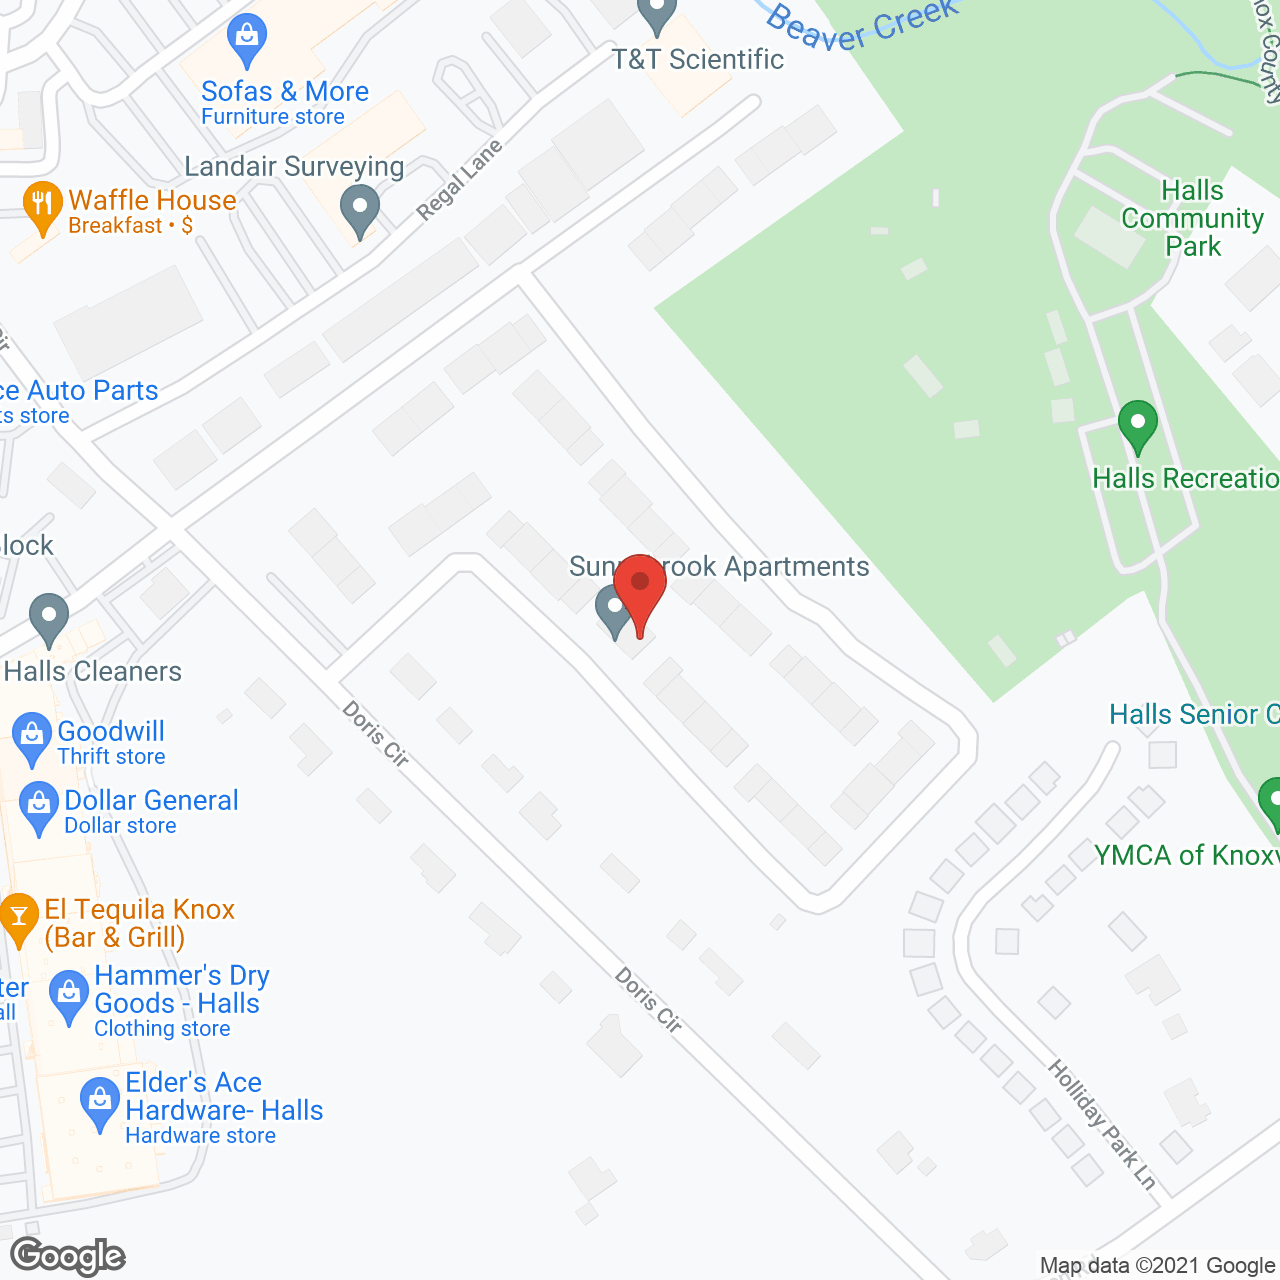 Sunnybrook Apartments in google map